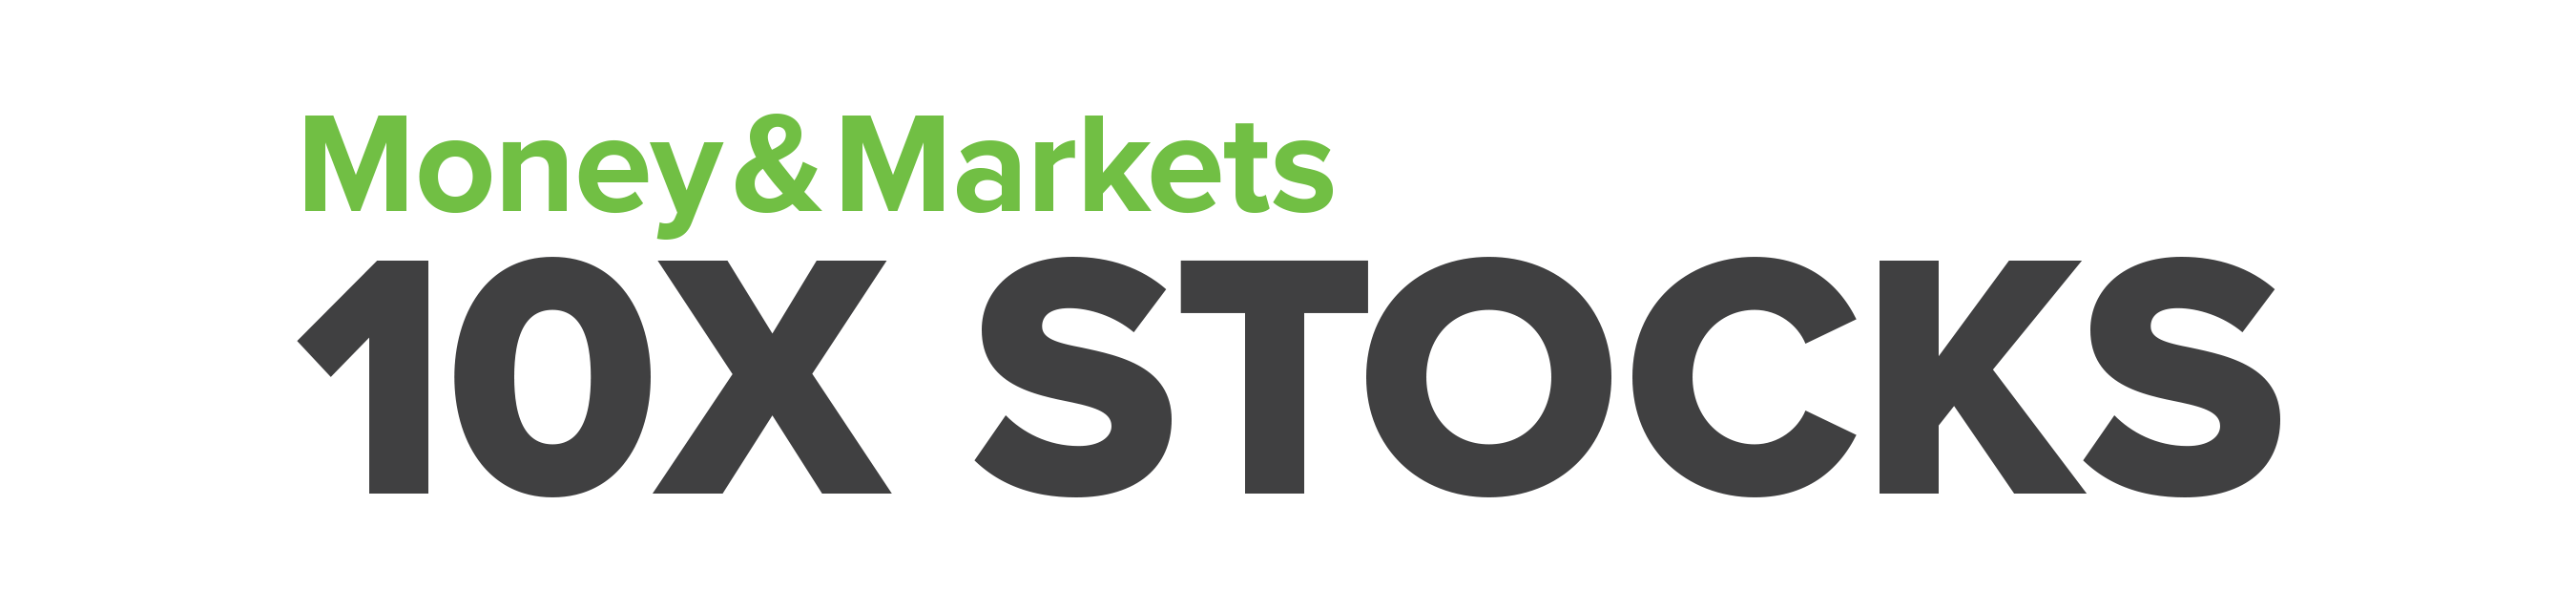 10X Stocks logo